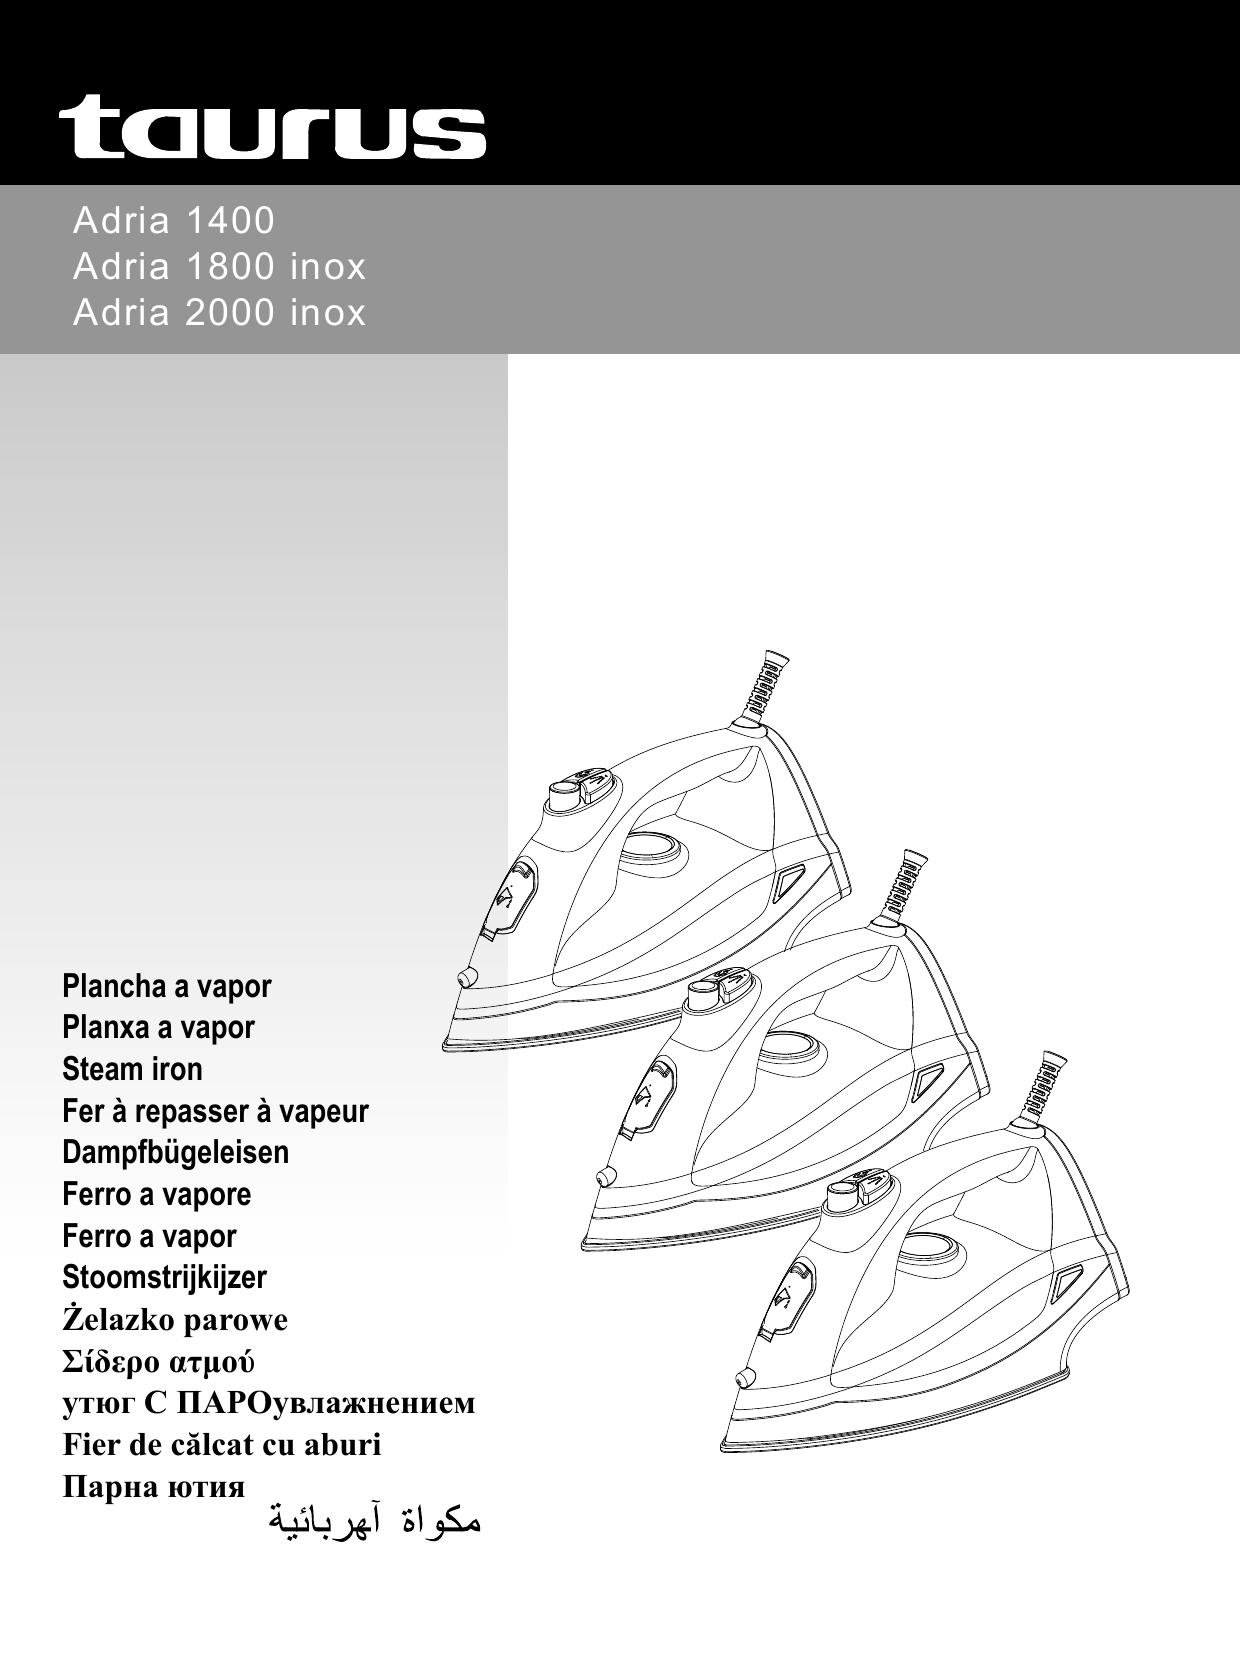 Taurus Group Adria 2000 inox Iron User Manual